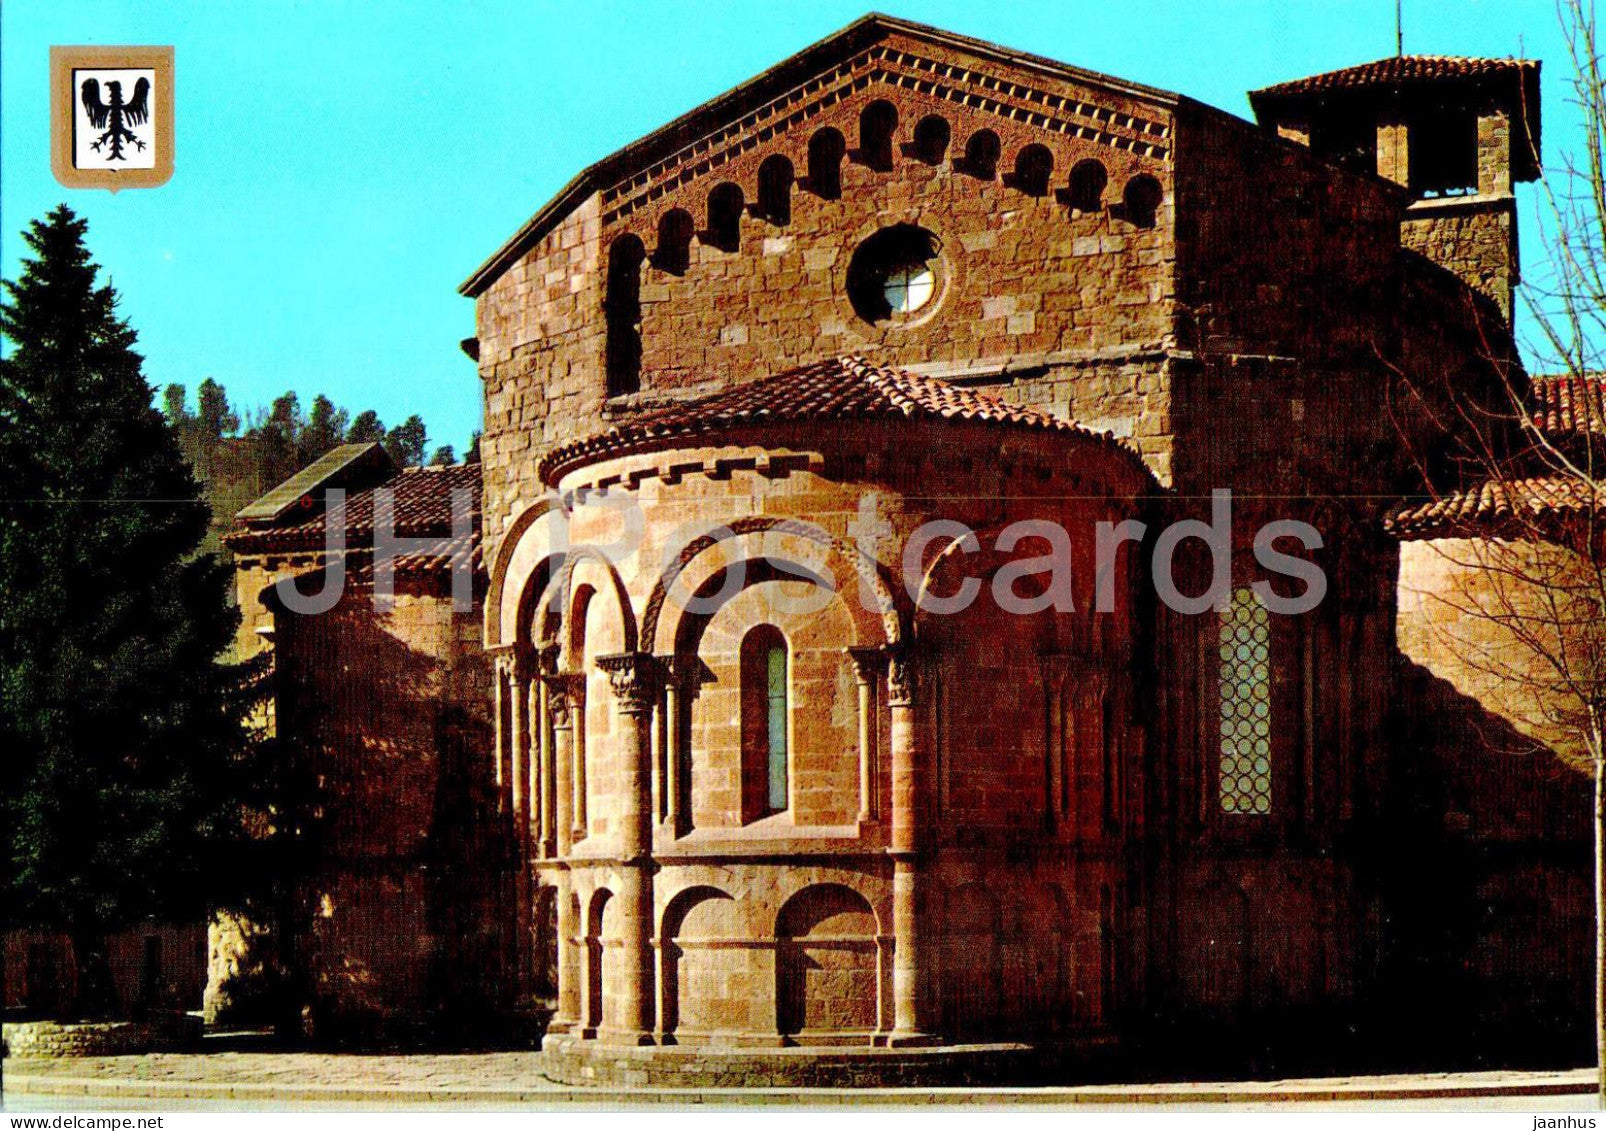 Monestir de Sant Joan de les Abadesses - Absis principal del Monestir - monastery's principal apsis - 6 - Spain - unused - JH Postcards